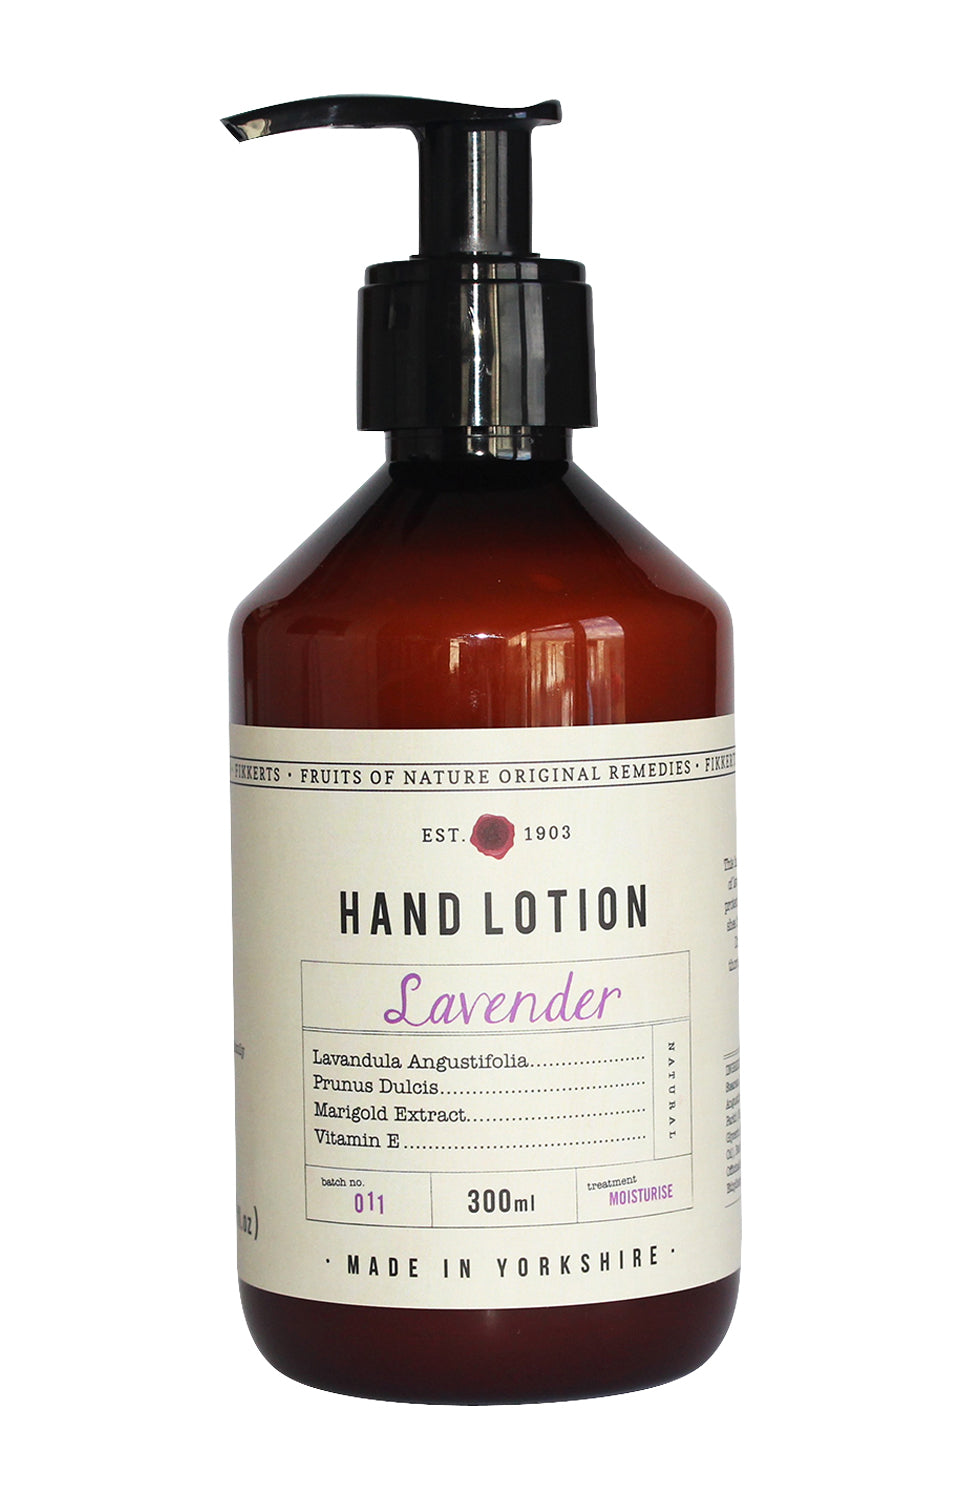 Lavender hand lotion